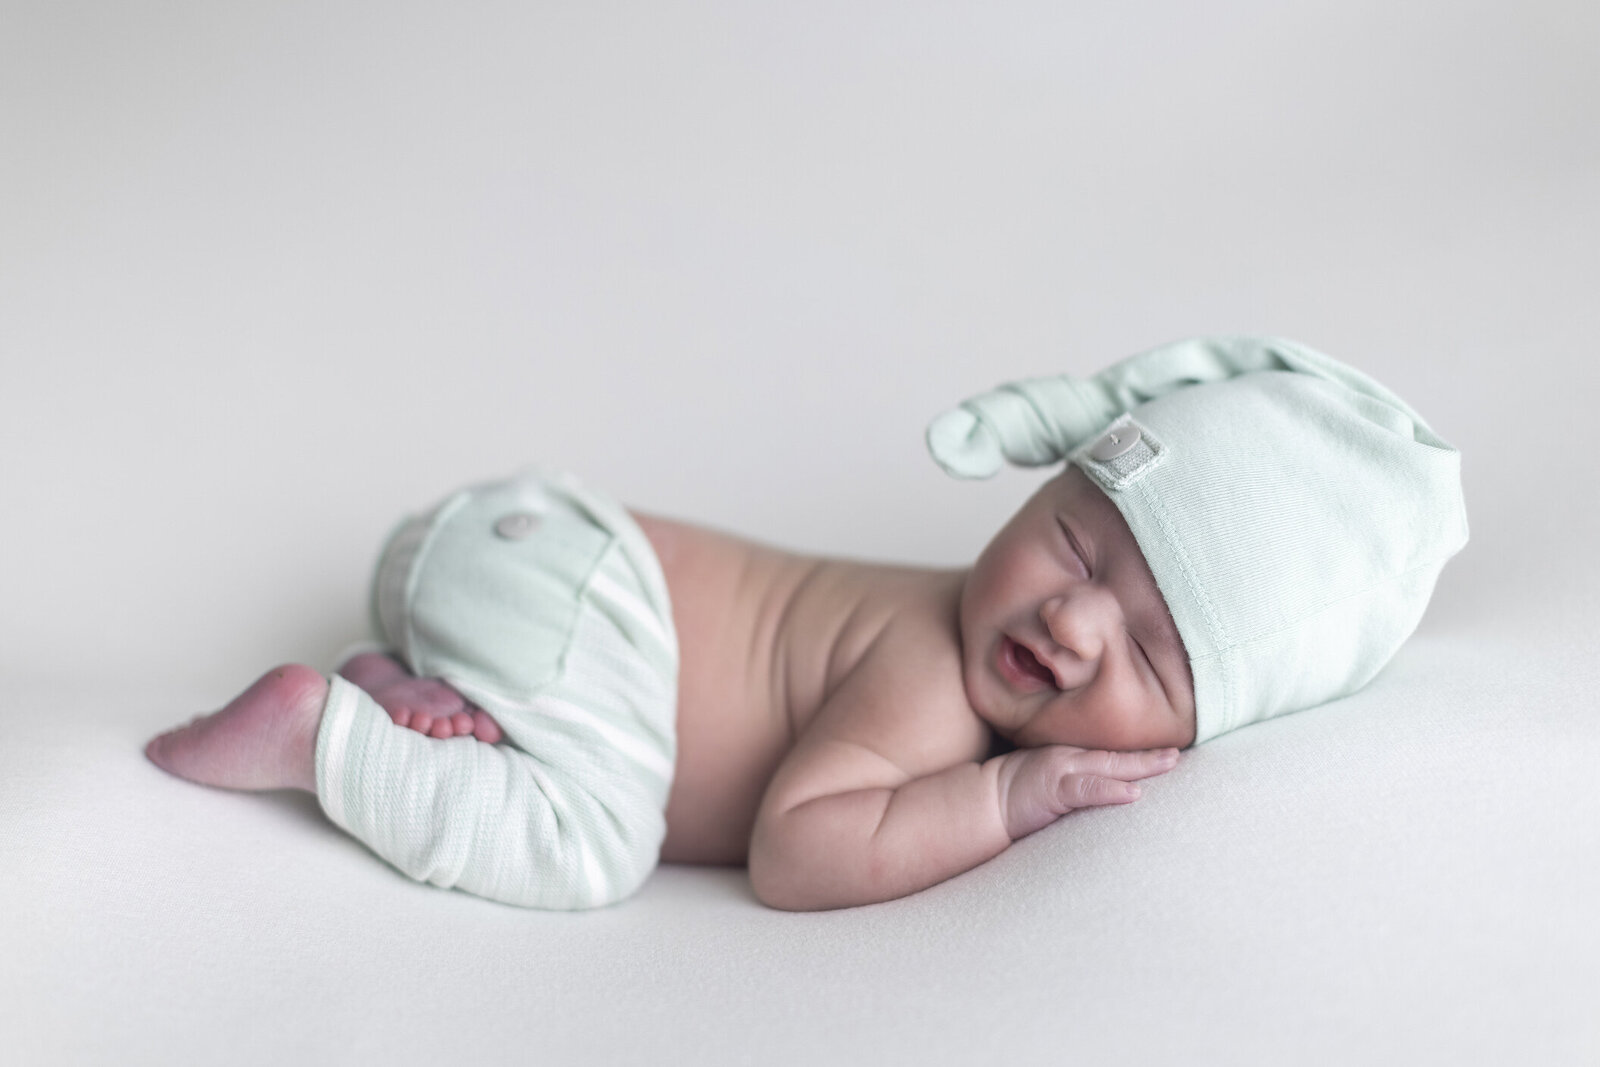 Newborn boy grins on white fabric.